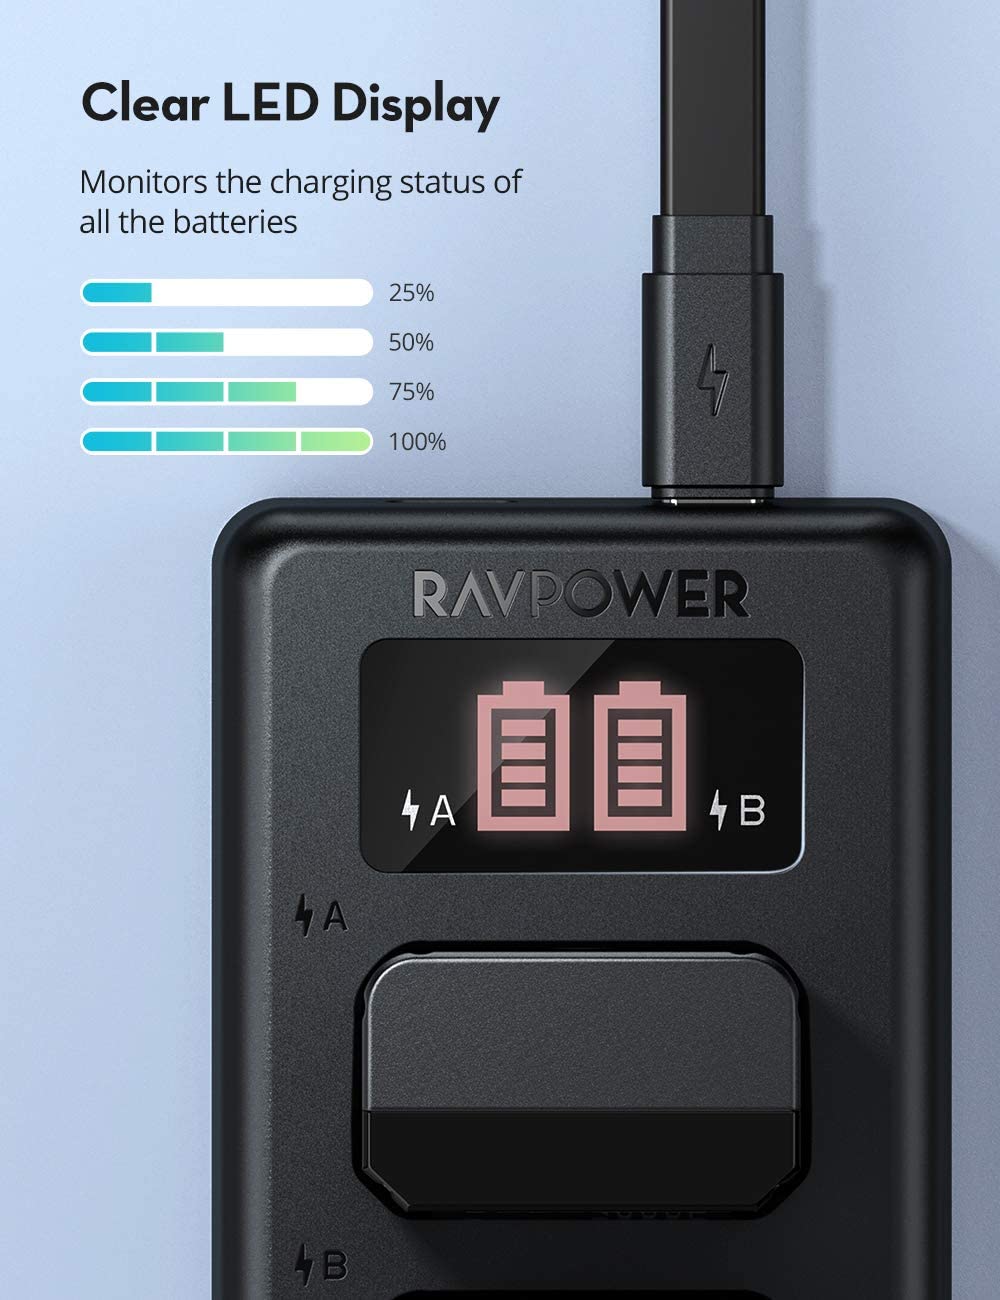 5 Ports Powered USB Hub with 4 Data Ports+1 Fast Charging Port(RSH-A35-B)